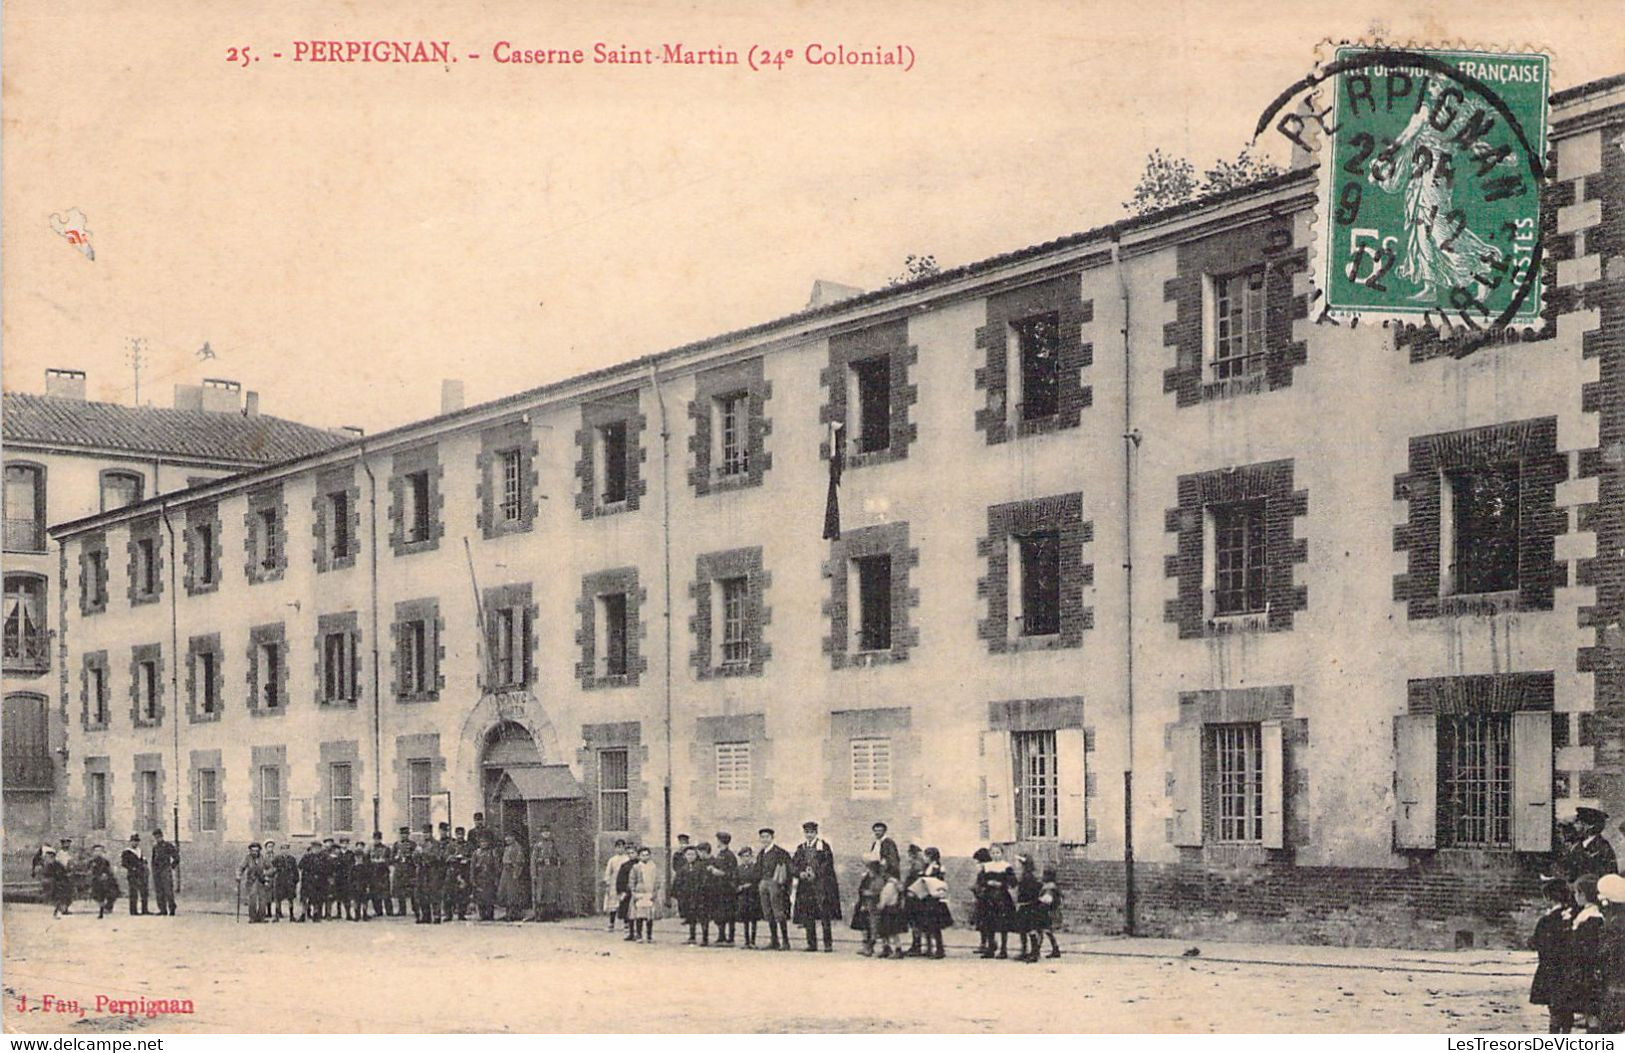 MILITARIA - PERPIGNAN - Caserne Saint Martin - 24è Colonial - J Fau Perpignan - Carte Postale Ancienne - Kasernen